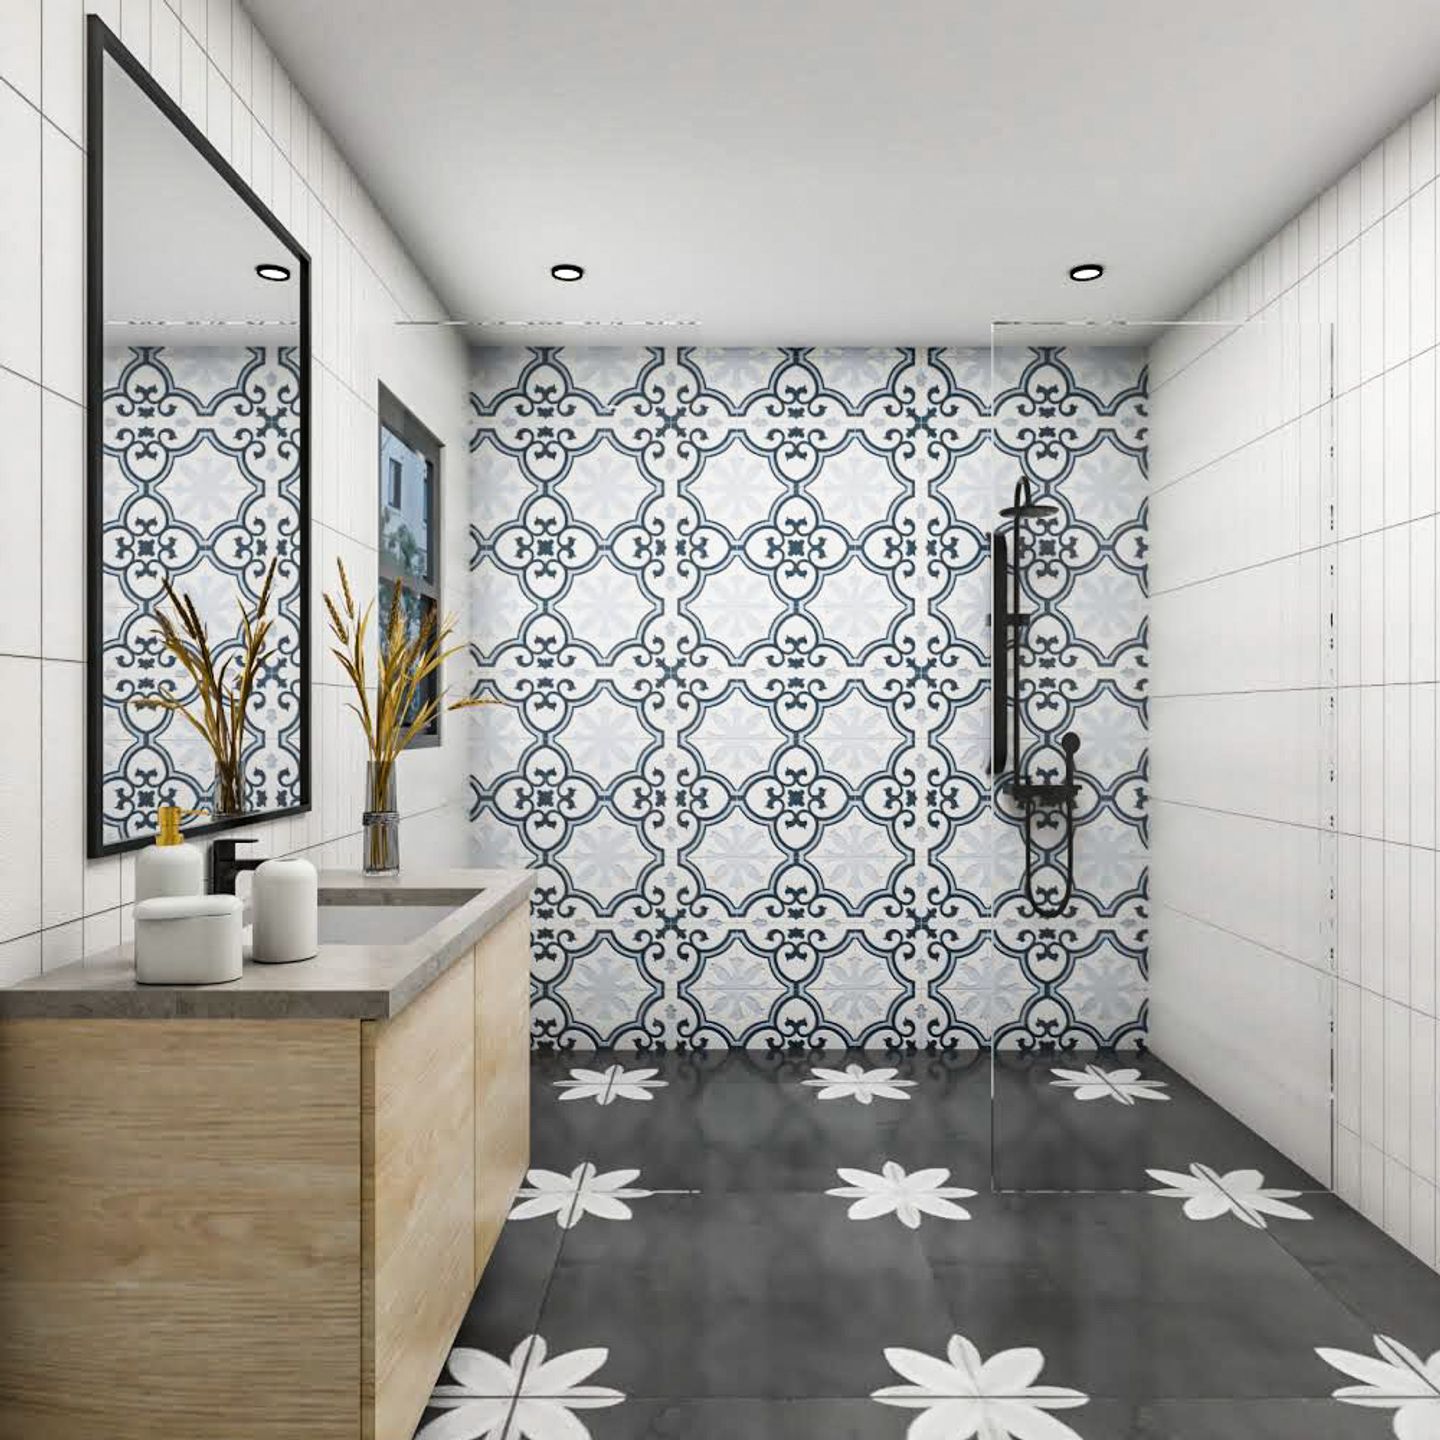 Bathroom Design With Blue Morroccan Tiles And Square Mirror - Livspace